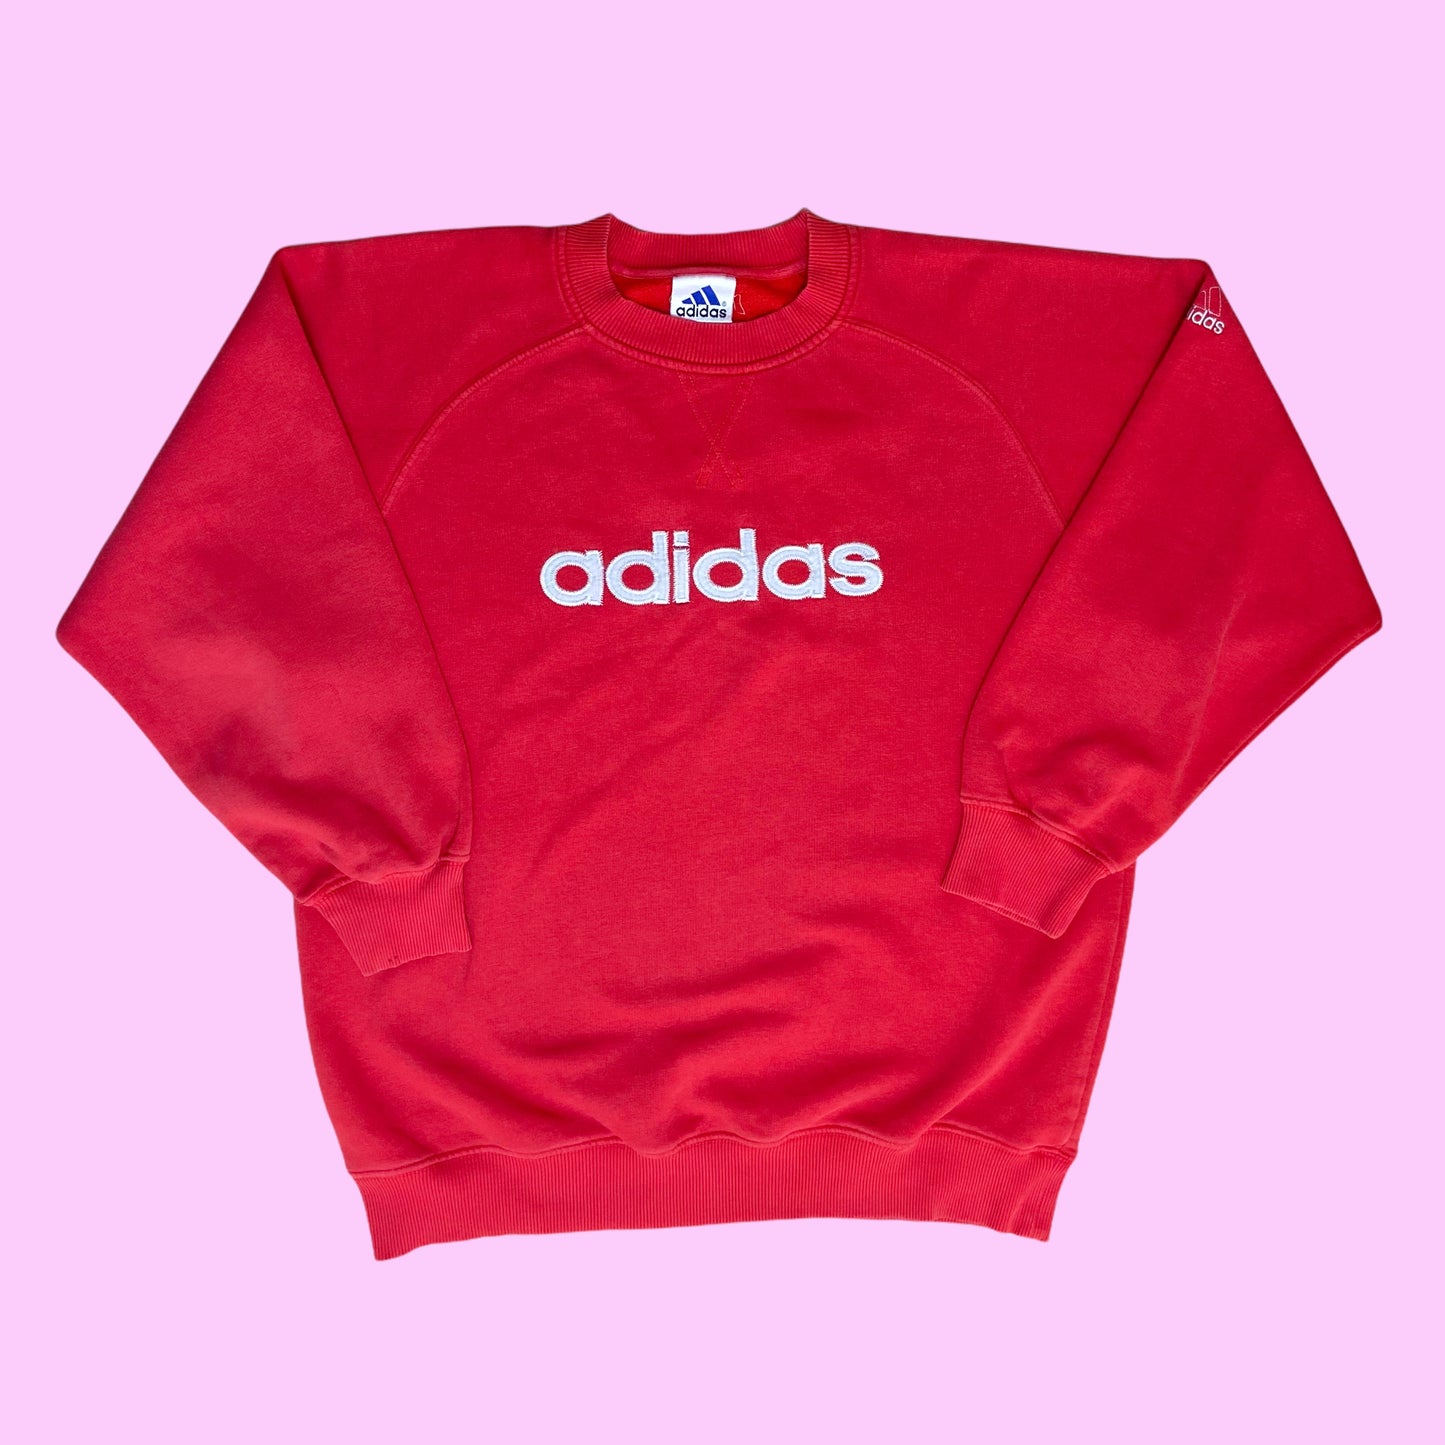 Vintage Adidas Sweater - XL